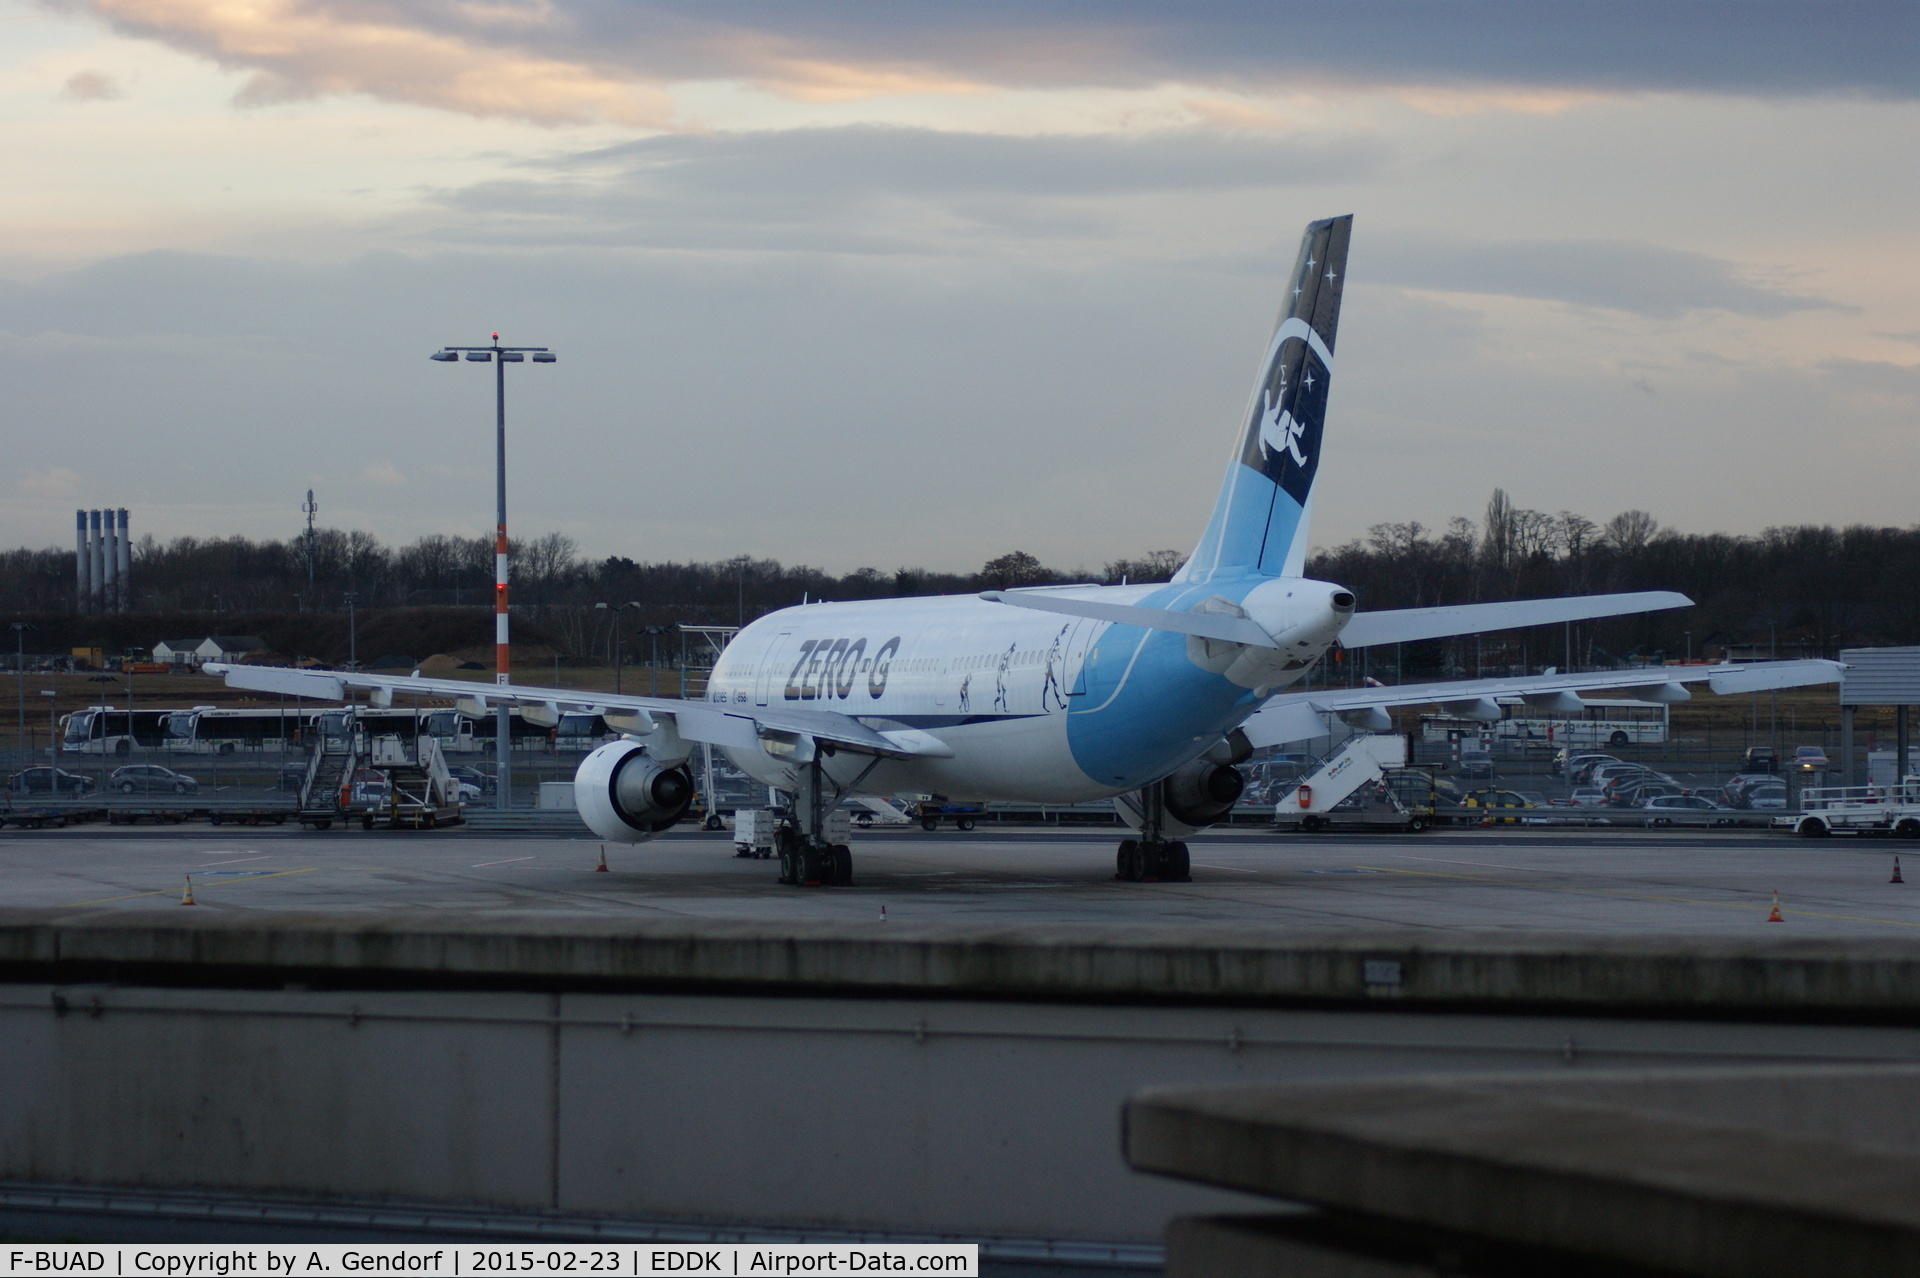 F-BUAD, 1973 Airbus A300B2-103 C/N 003, Novespace, Zero G ttl., is here parked on the apron at Köln / Bonn Airport(EDDK)